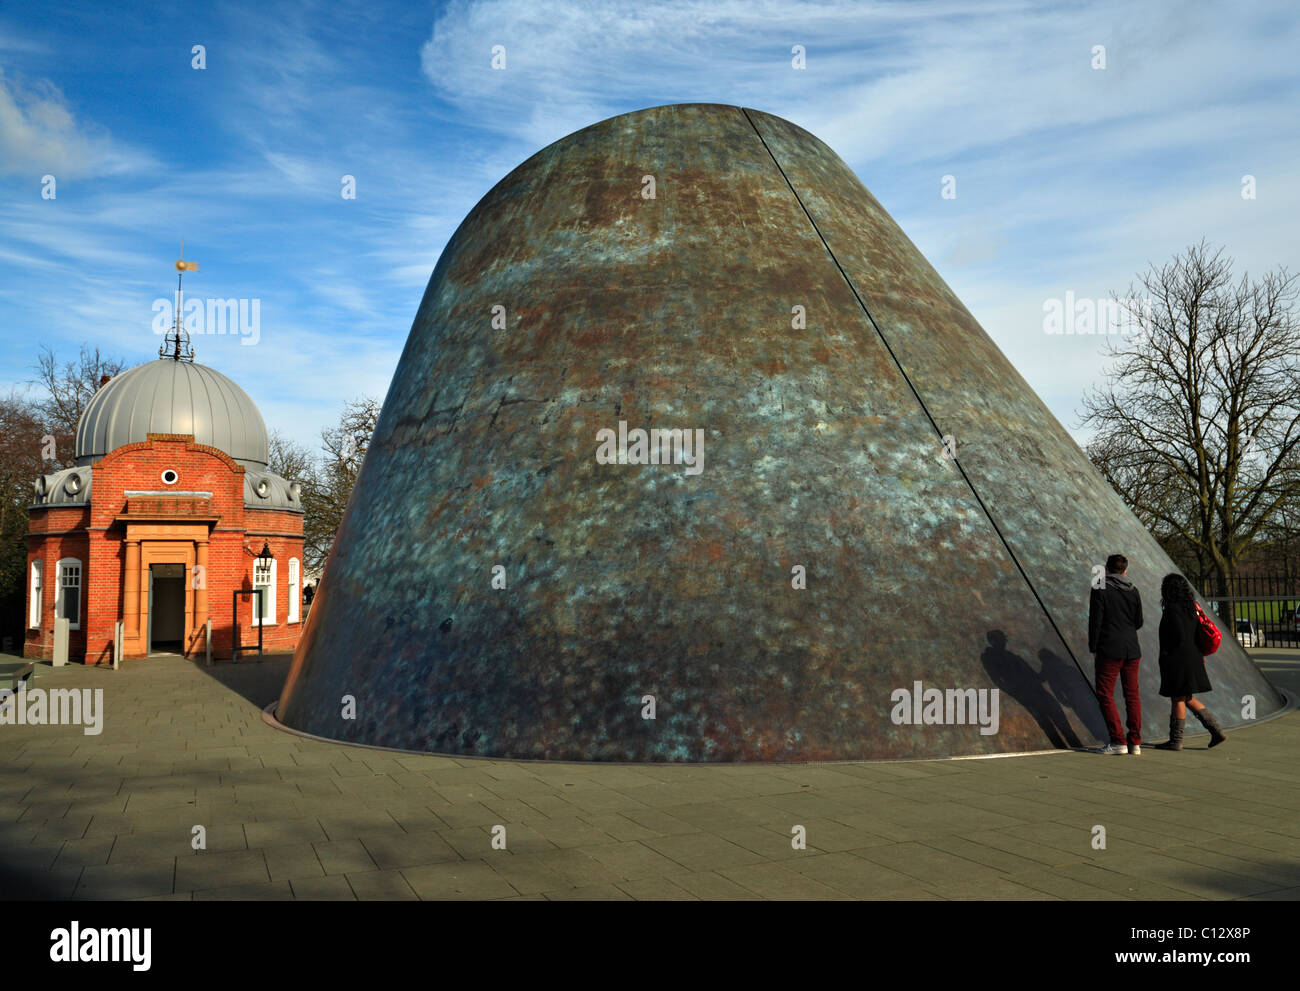 Royal Observatory Peter Harrison planetarium, Greenwich, Londra. Foto Stock